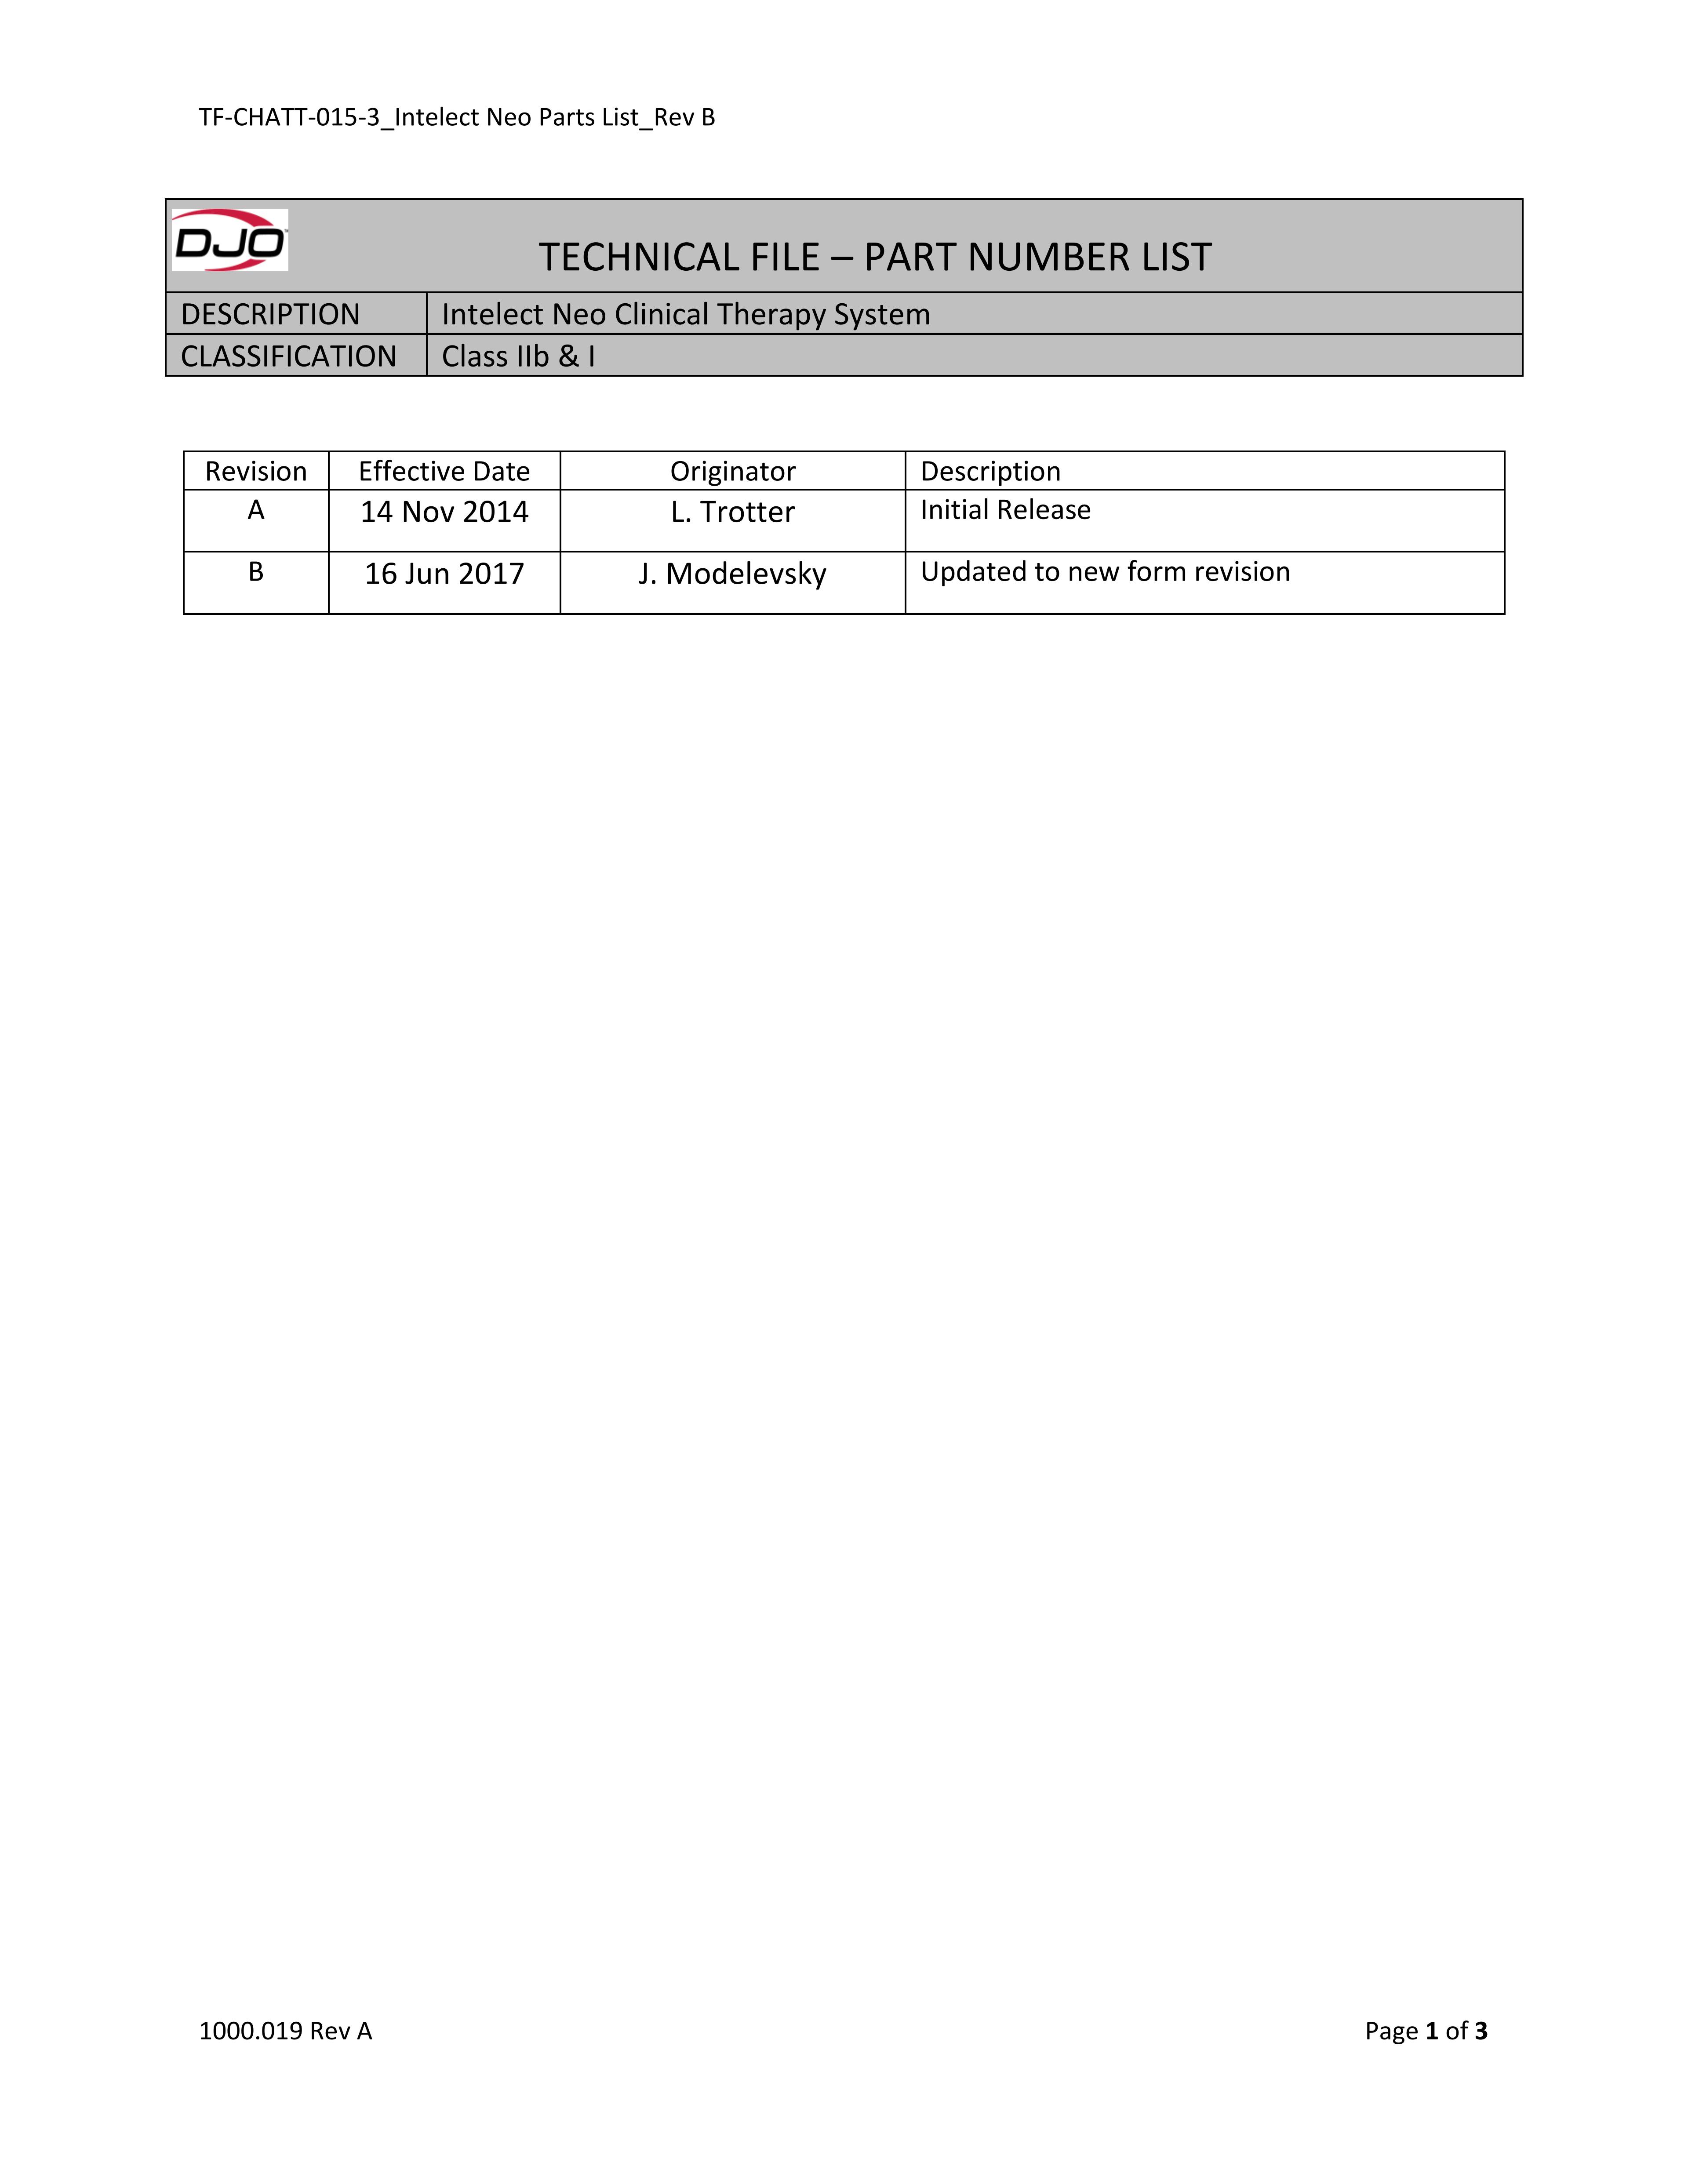 TF-CHATT-015-3_Intelect Neo Parts List_Rev B.pdf